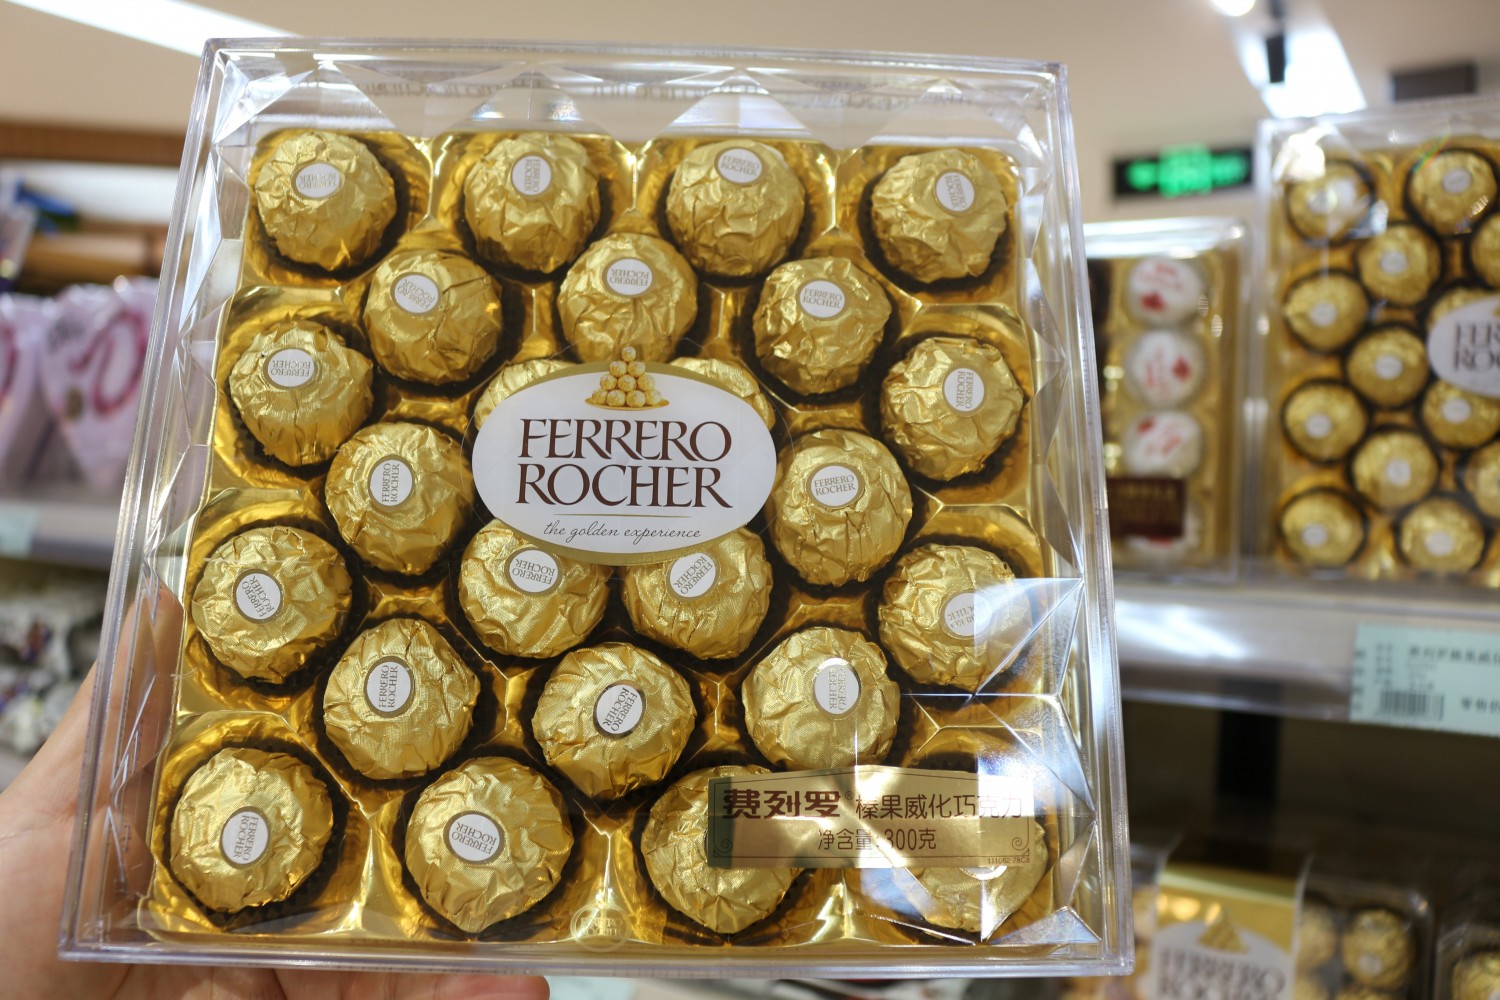 Ferrero Rocher’s Owner Buys Dori for R$2bn